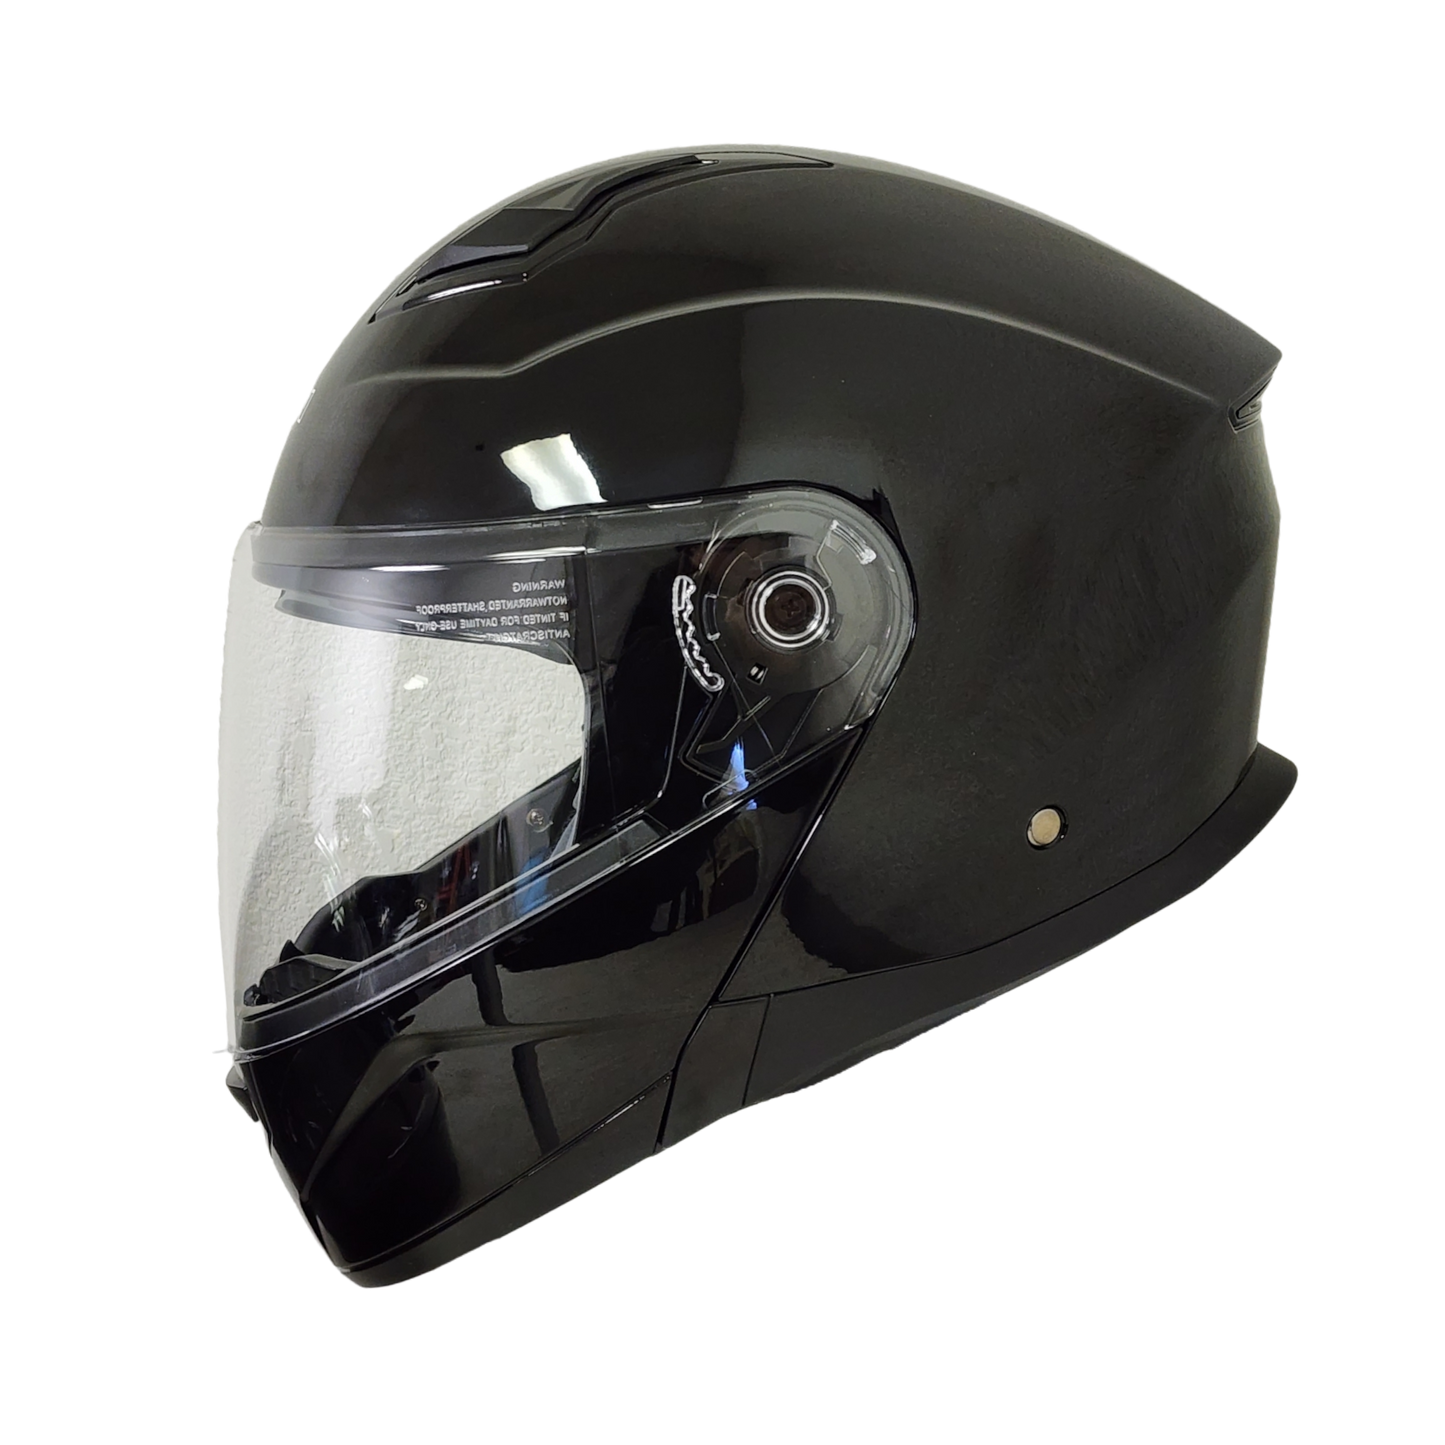 Newly redesigned largest helmet in the world! - Vega Superdome Modular Helmet - Matte Black